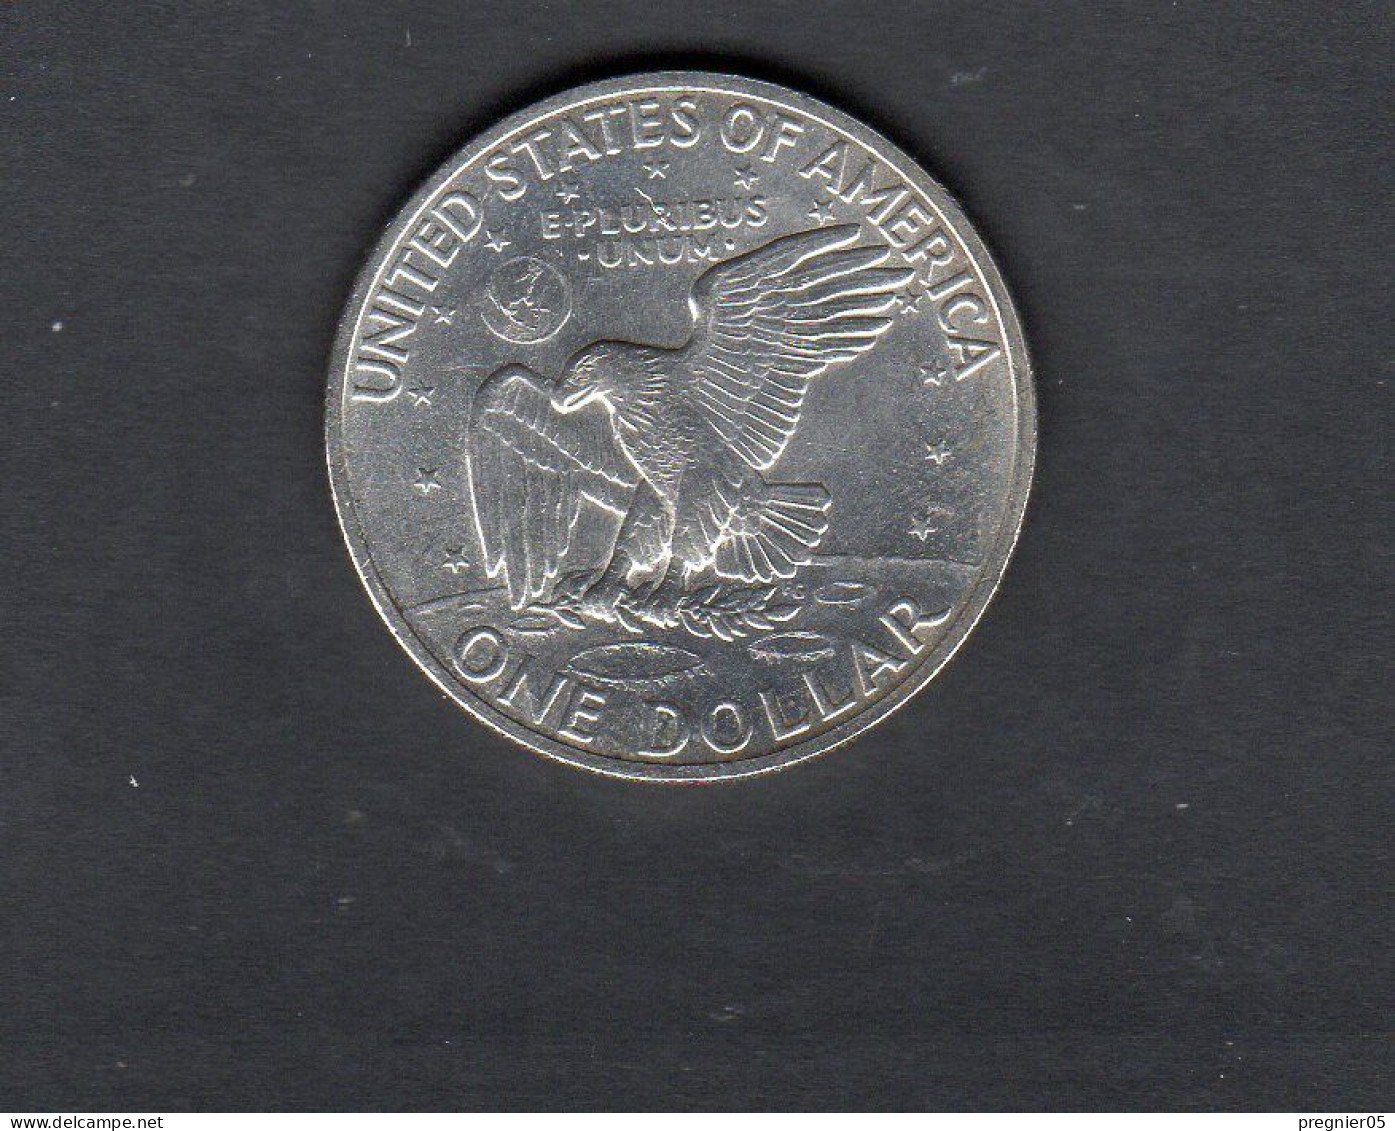 Baisse De Prix USA - Pièce 1 Dollar Argent Eisenhower 1971S  SUP/XF KM.203a - 1971-1978: Eisenhower